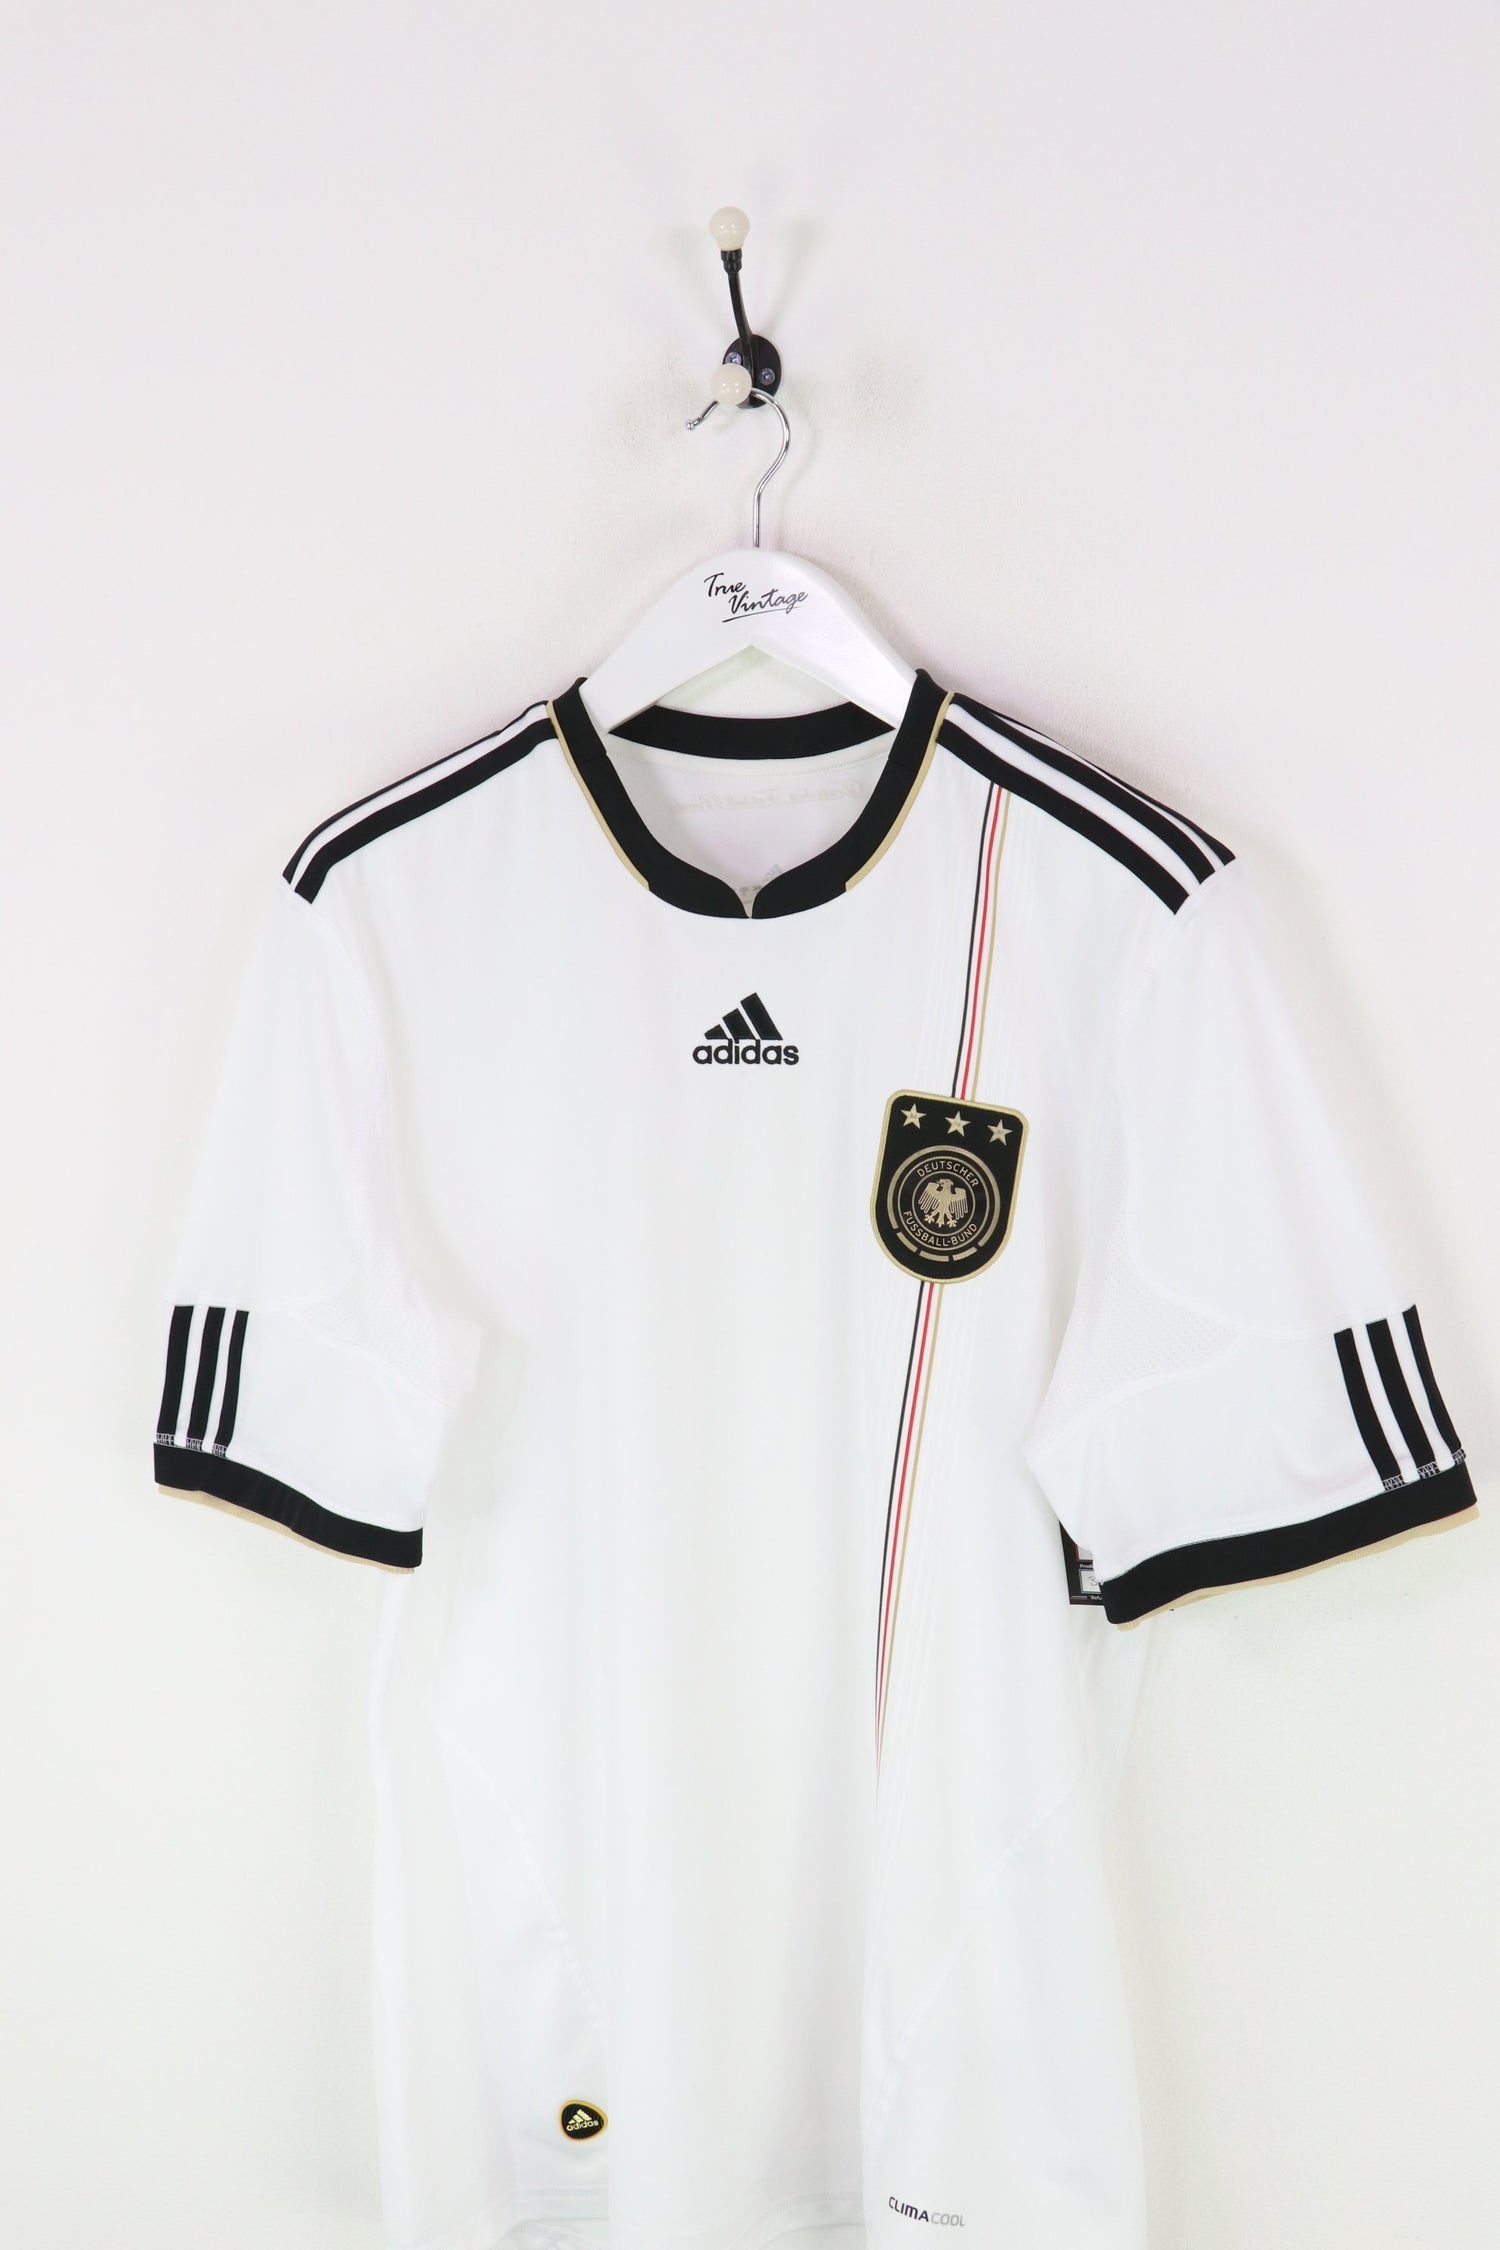 Adidas Germany Football Shirt White Small, Large & XL